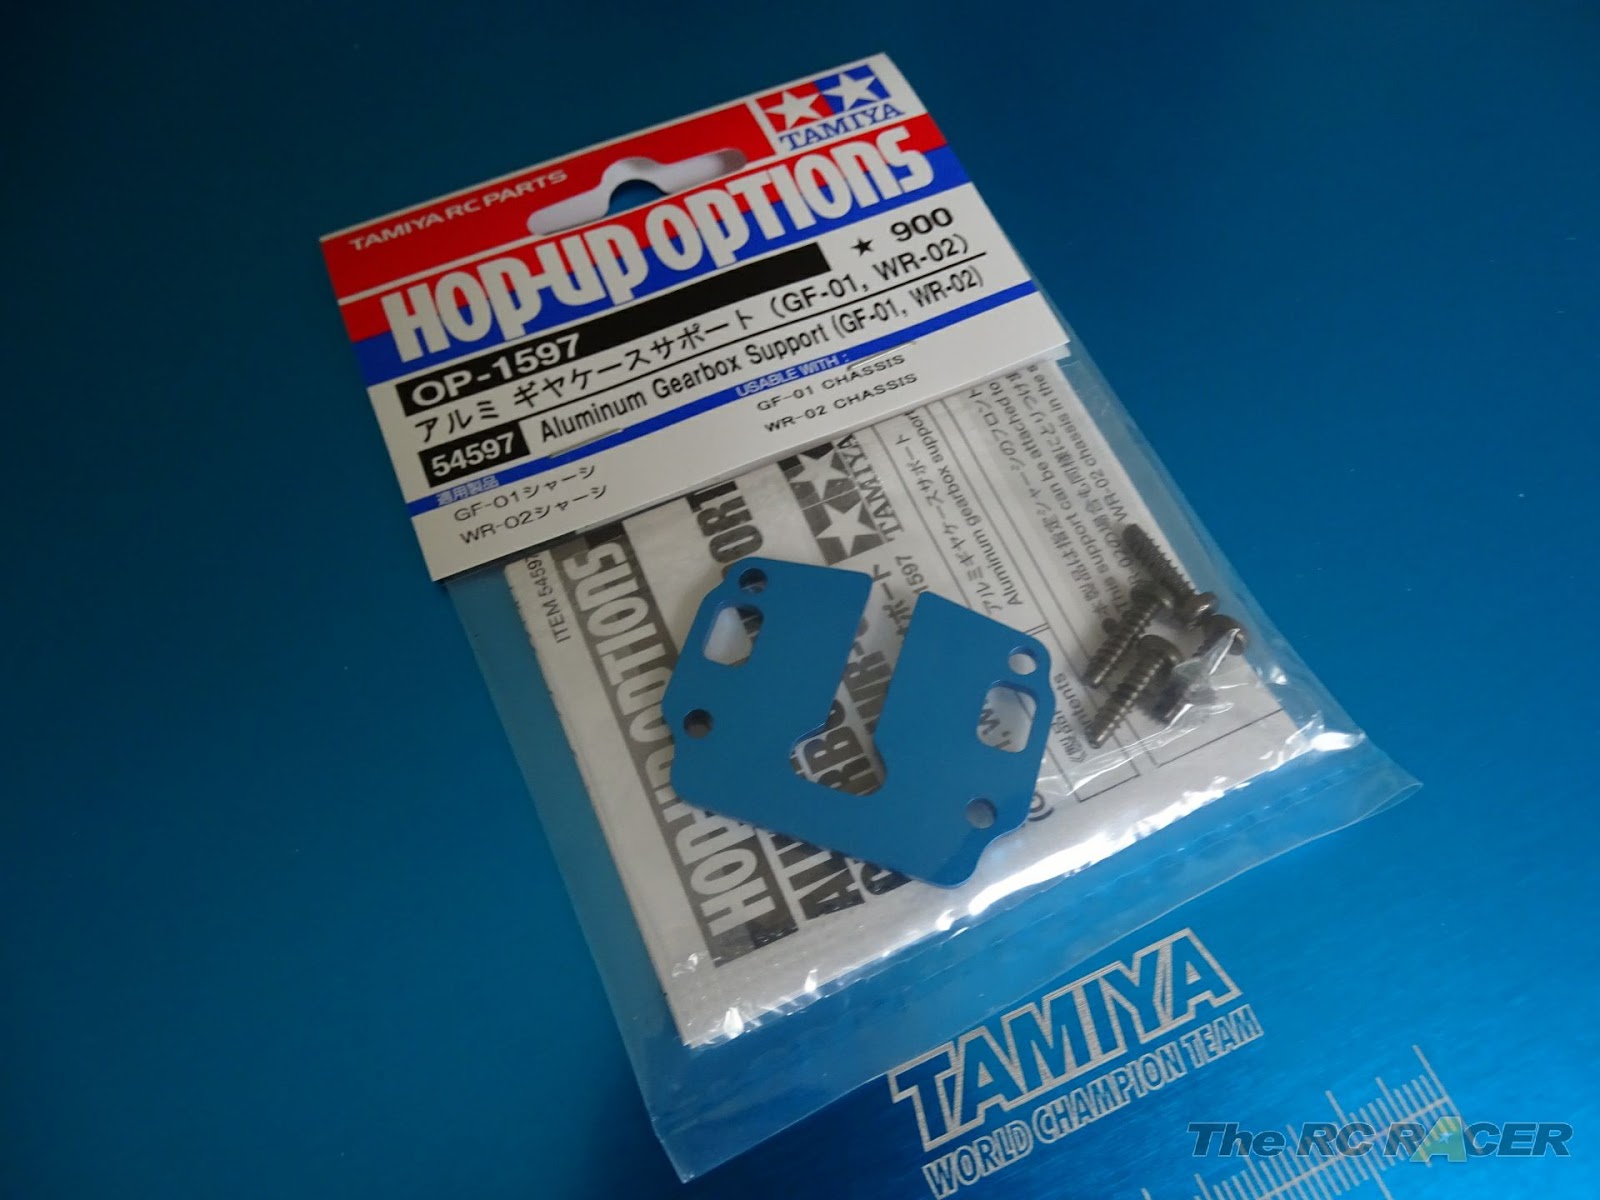 Tamiya 54597 Aluminum Gearbox Support GF-01/WR-02